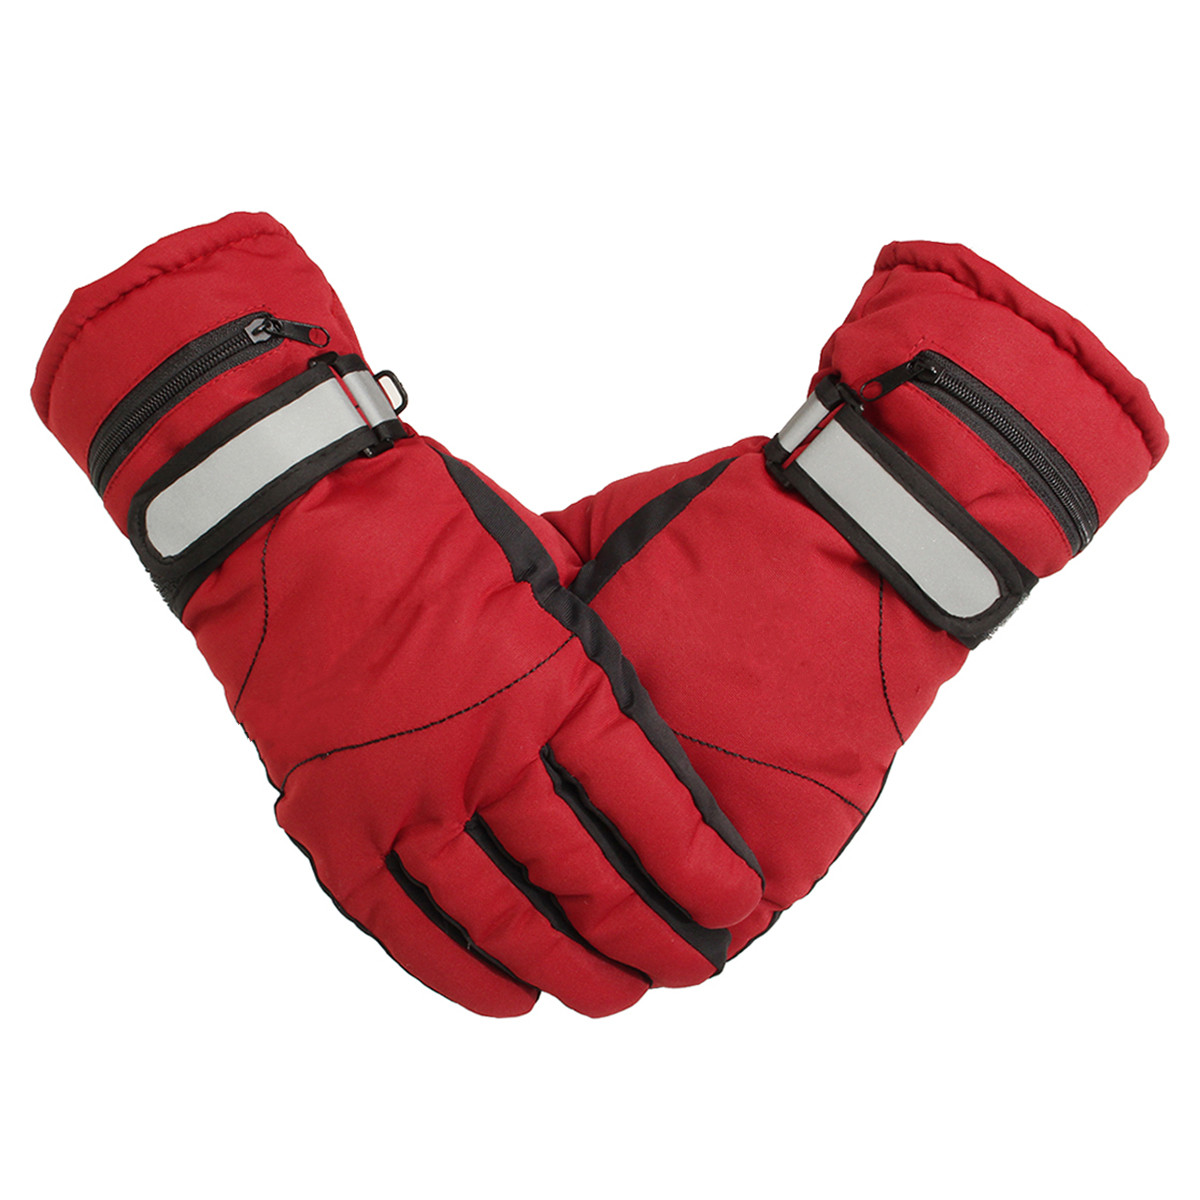 37V-2000mAh-Battery-Heated-Gloves-Motorcycle-Hunting-Winter-Warmer-Racing-Skiing-1241845